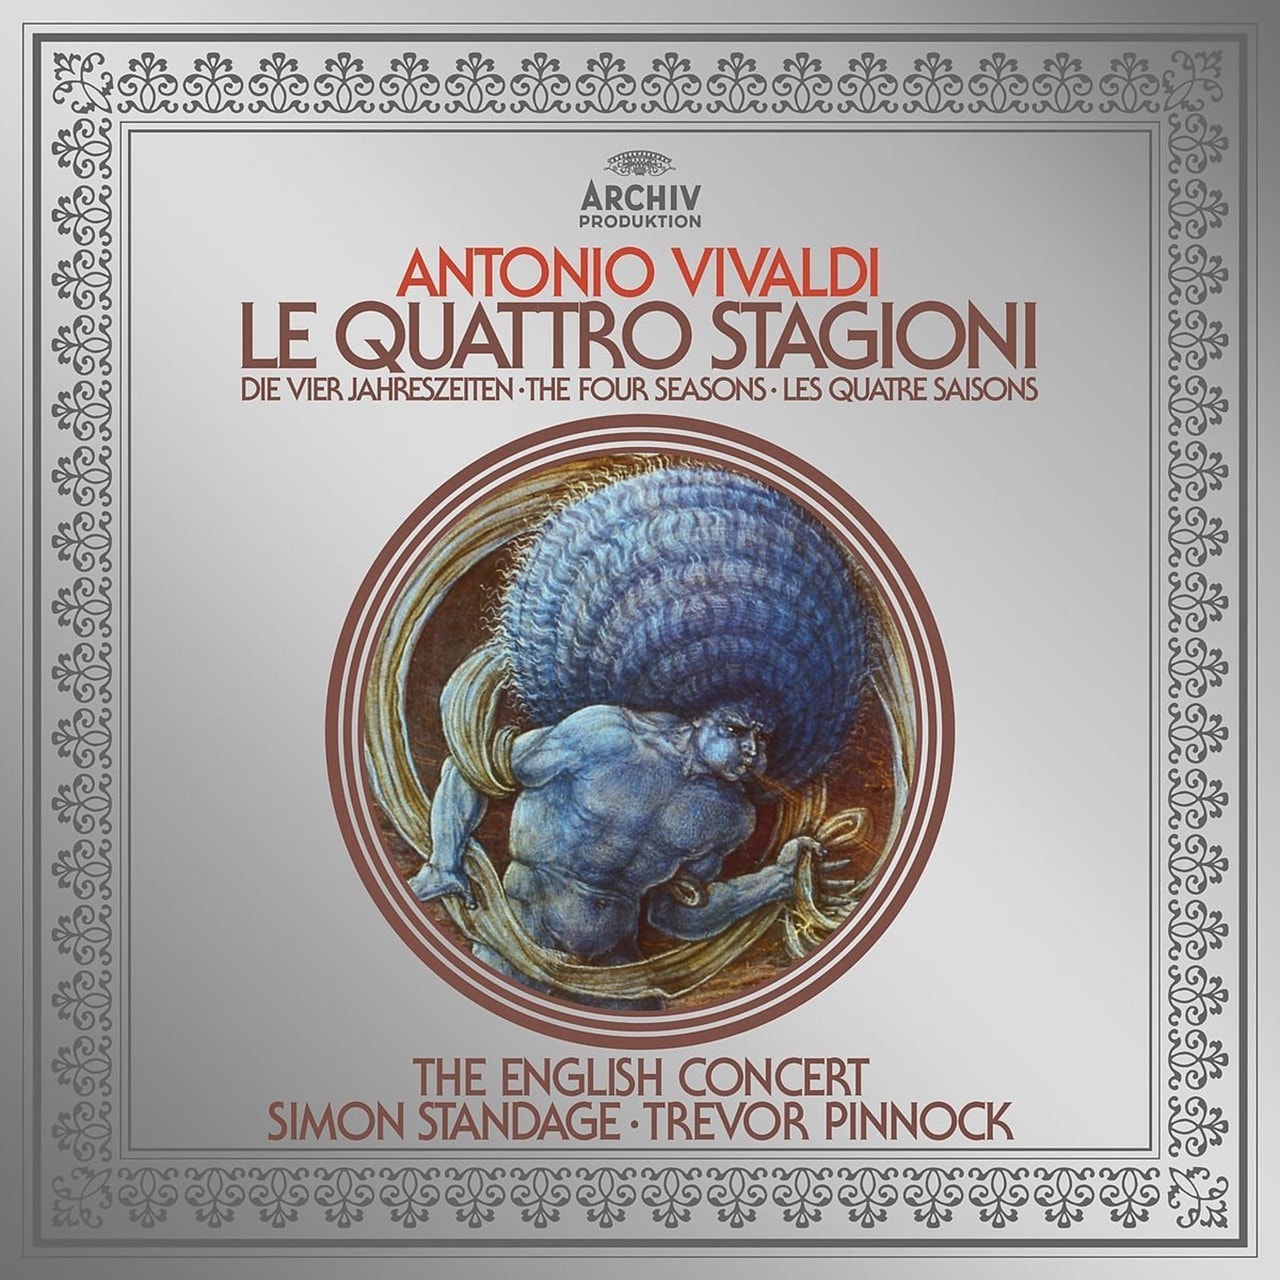 Antonio Vivaldi Le Quattro Stagioni Vinyl 12 Album Free Shipping Over £20 Hmv Store